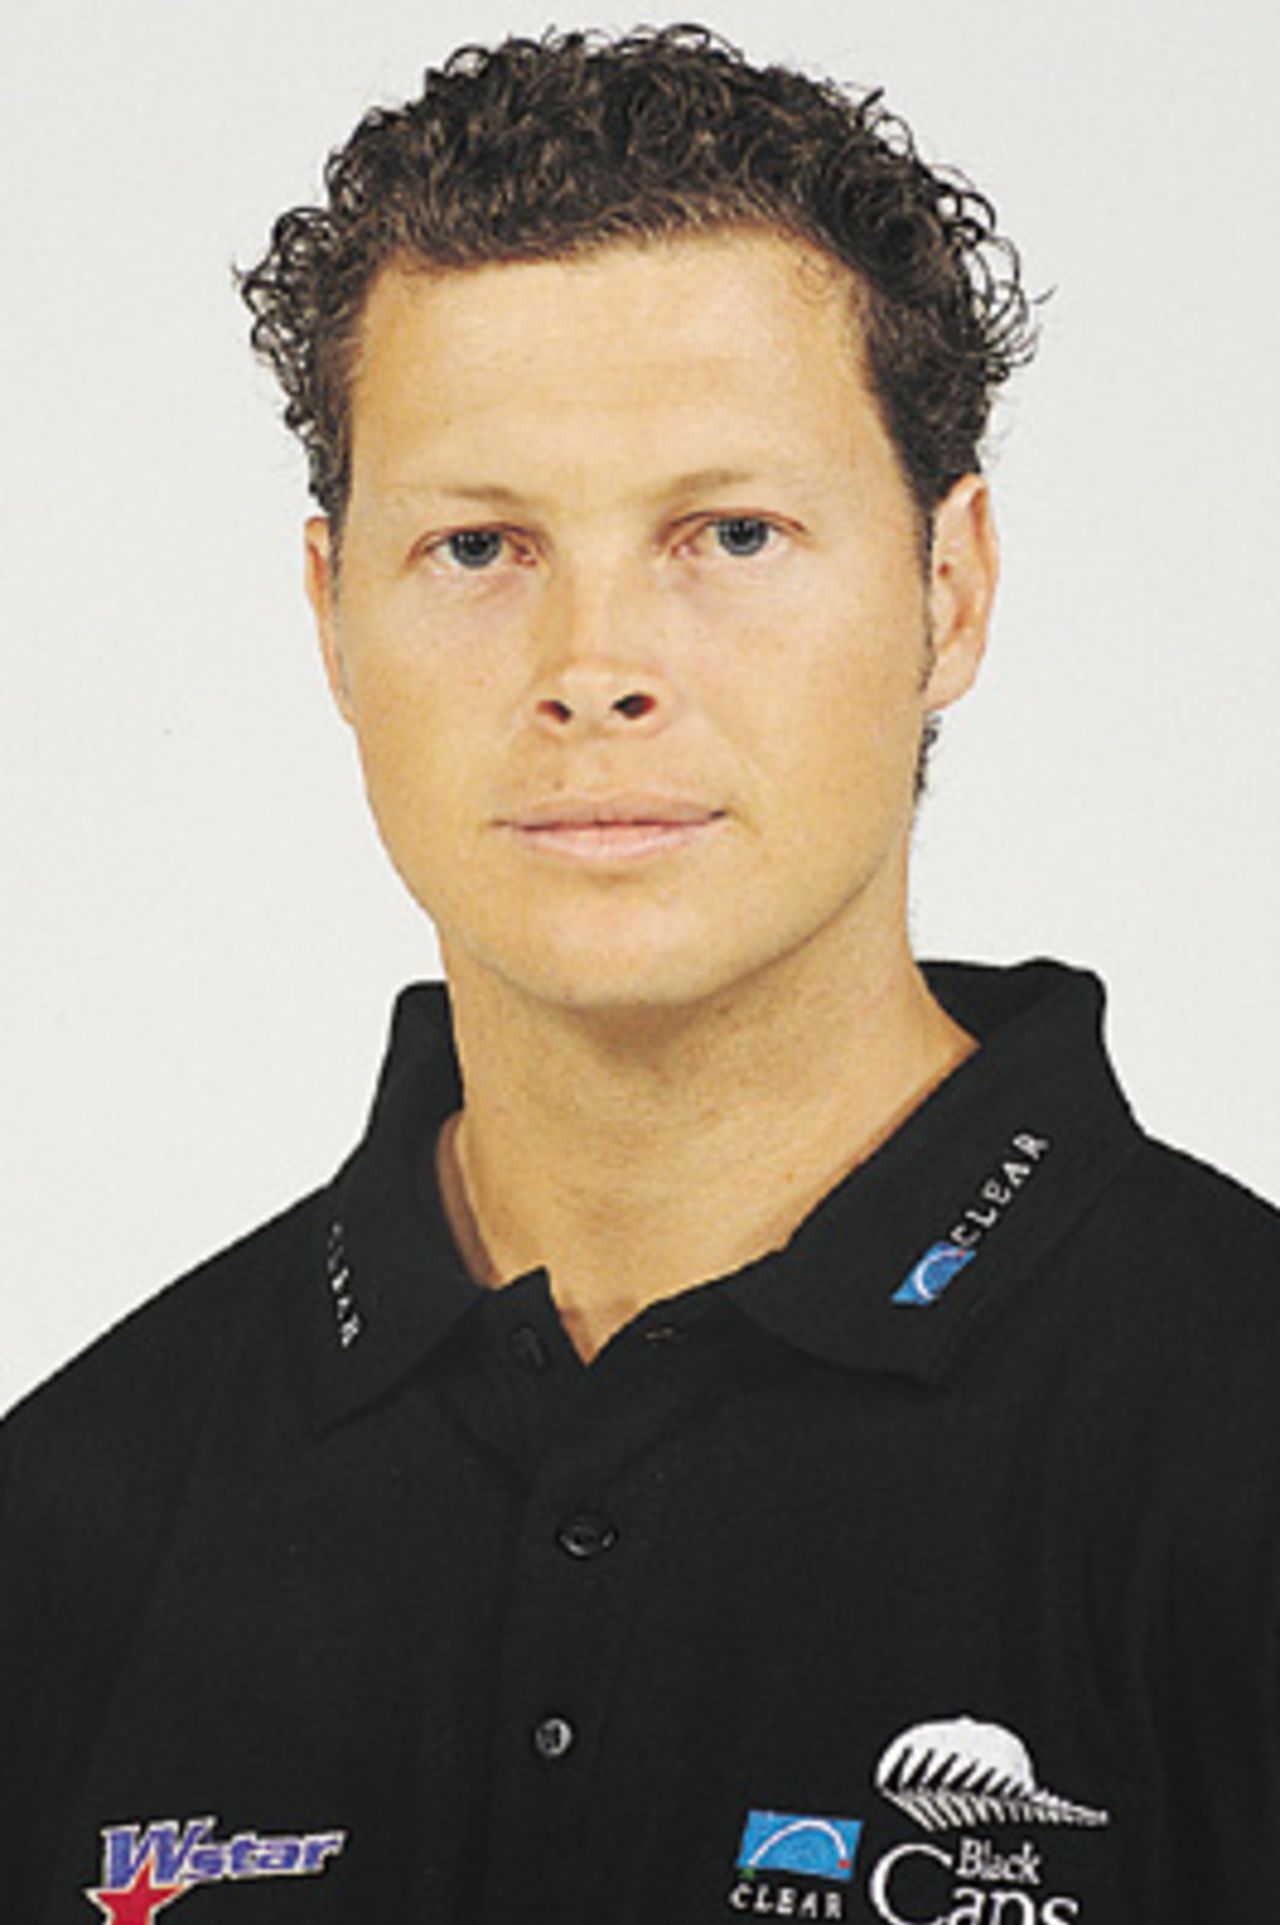 Portrait of Paul Wiseman - New Zealand player in the 2000/01 season